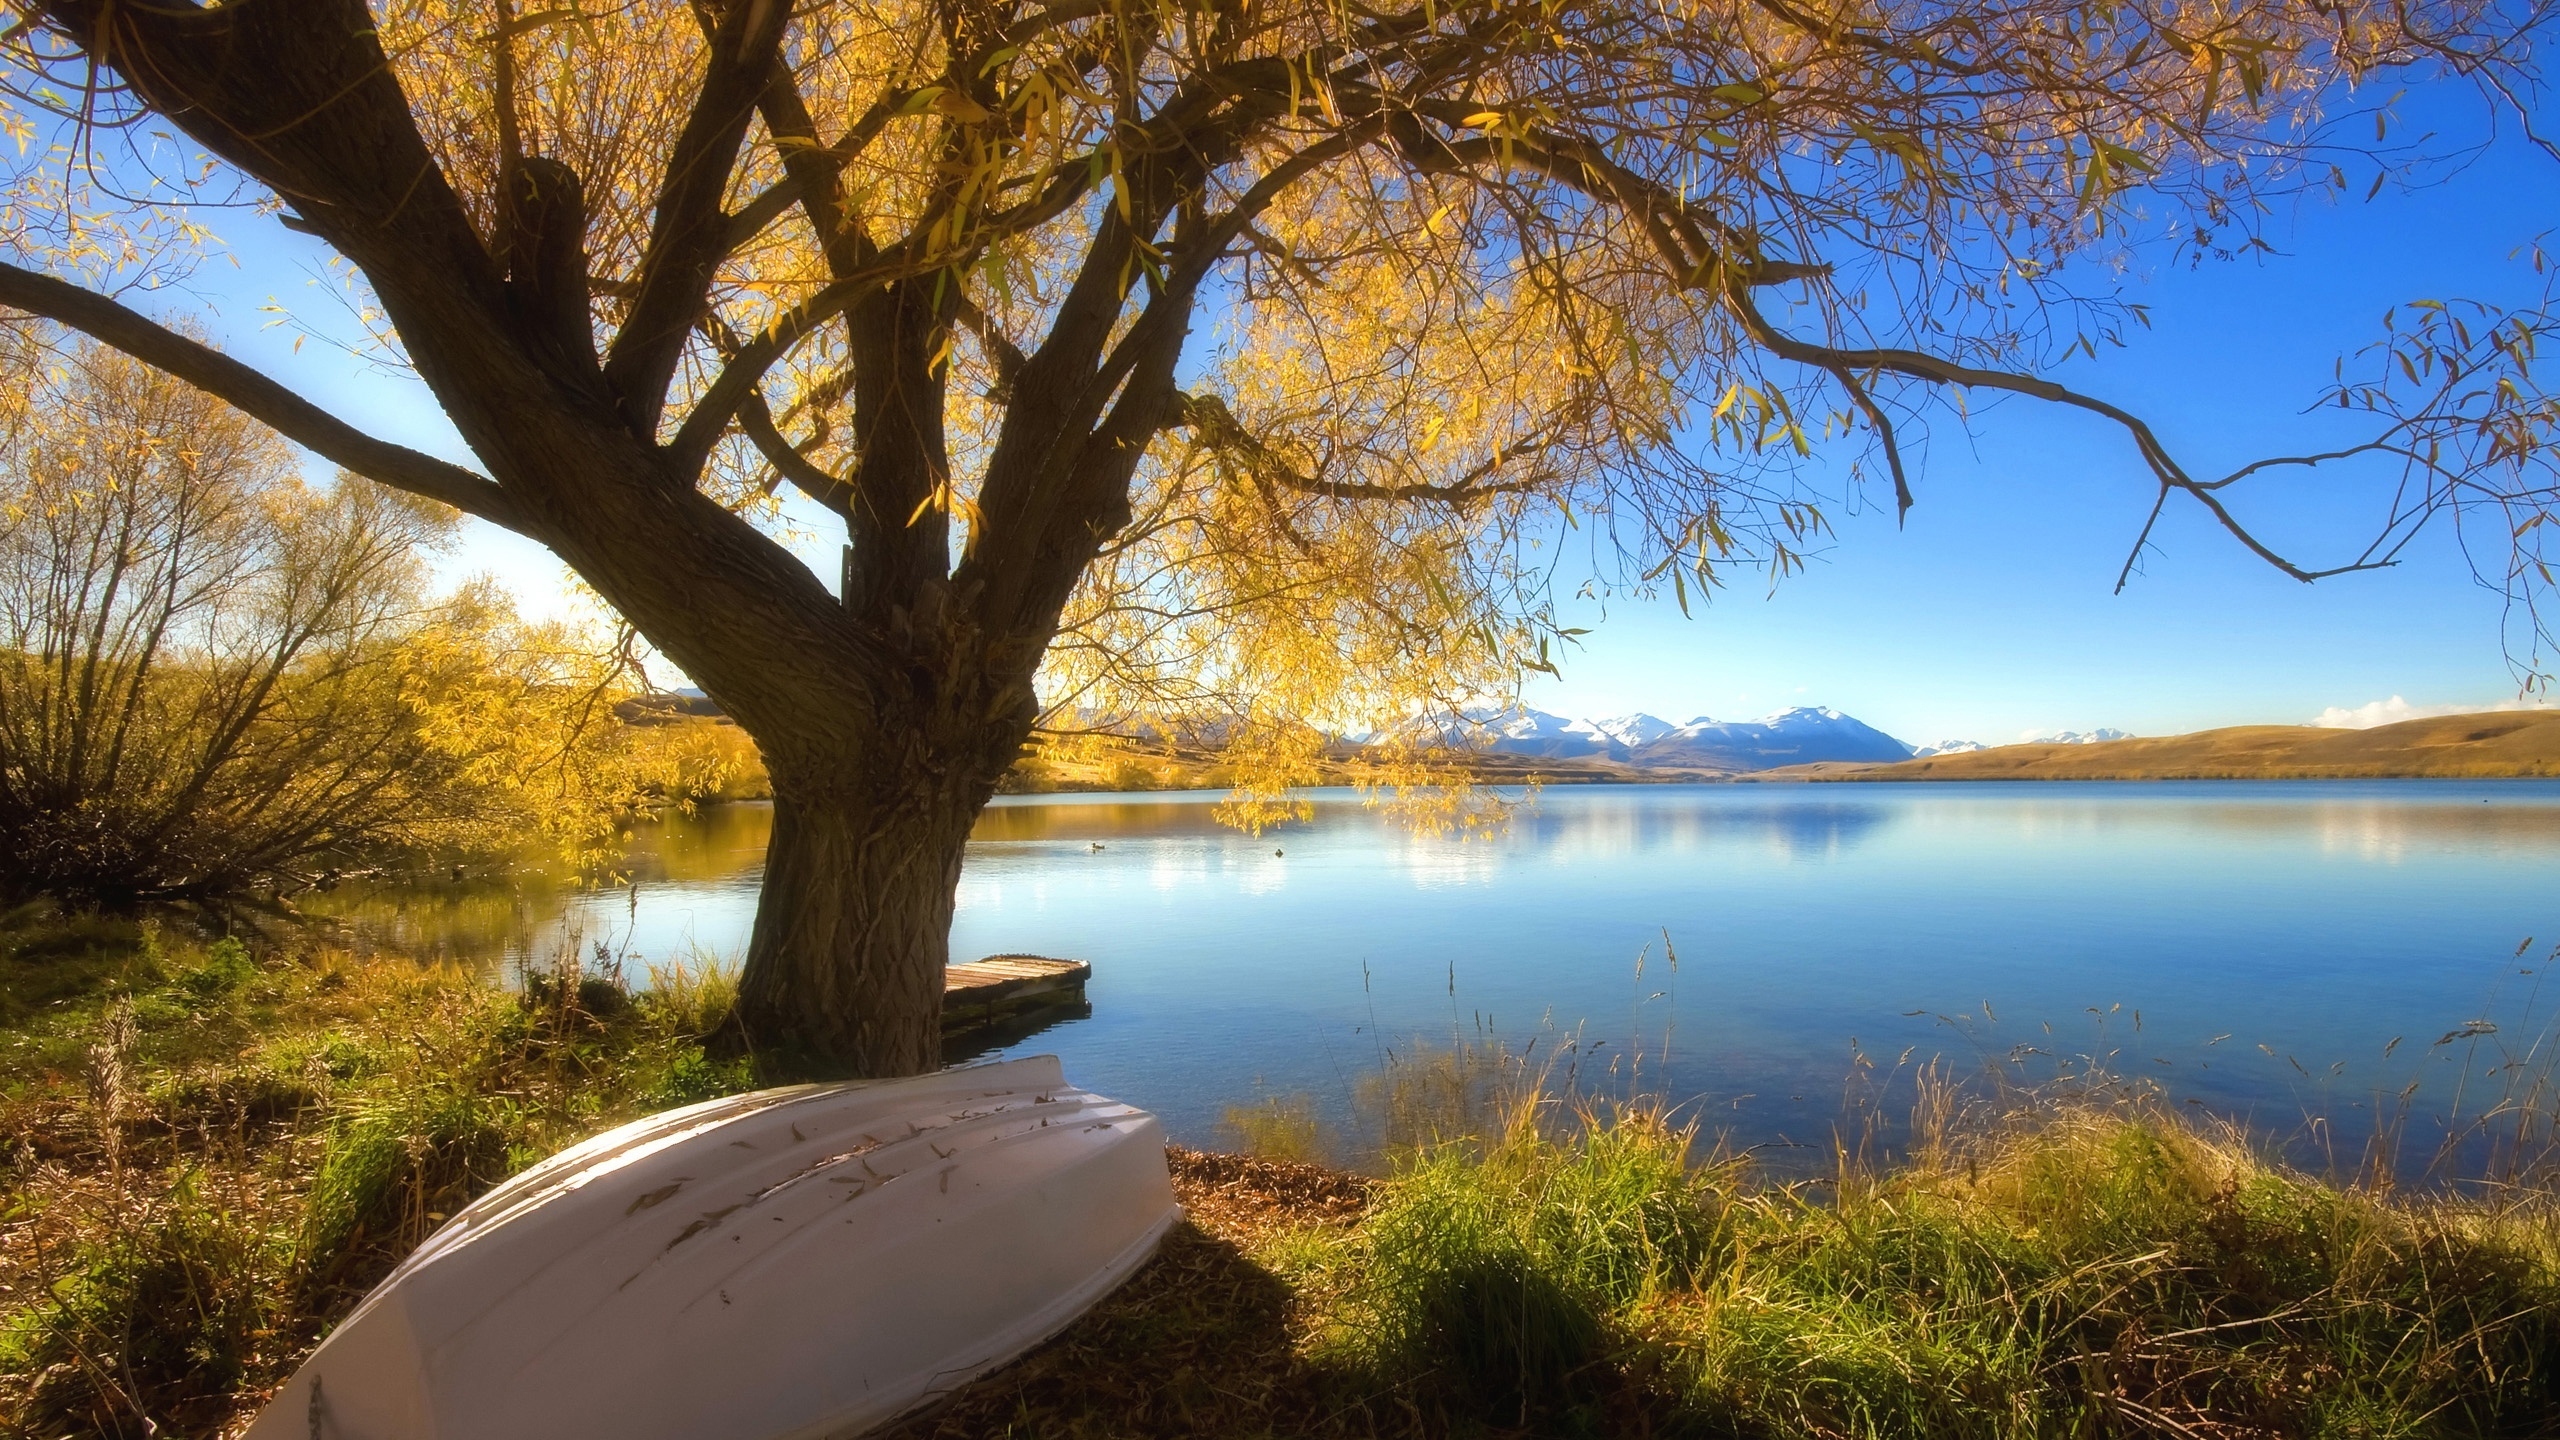 Autumn Lake for 2560x1440 HDTV resolution